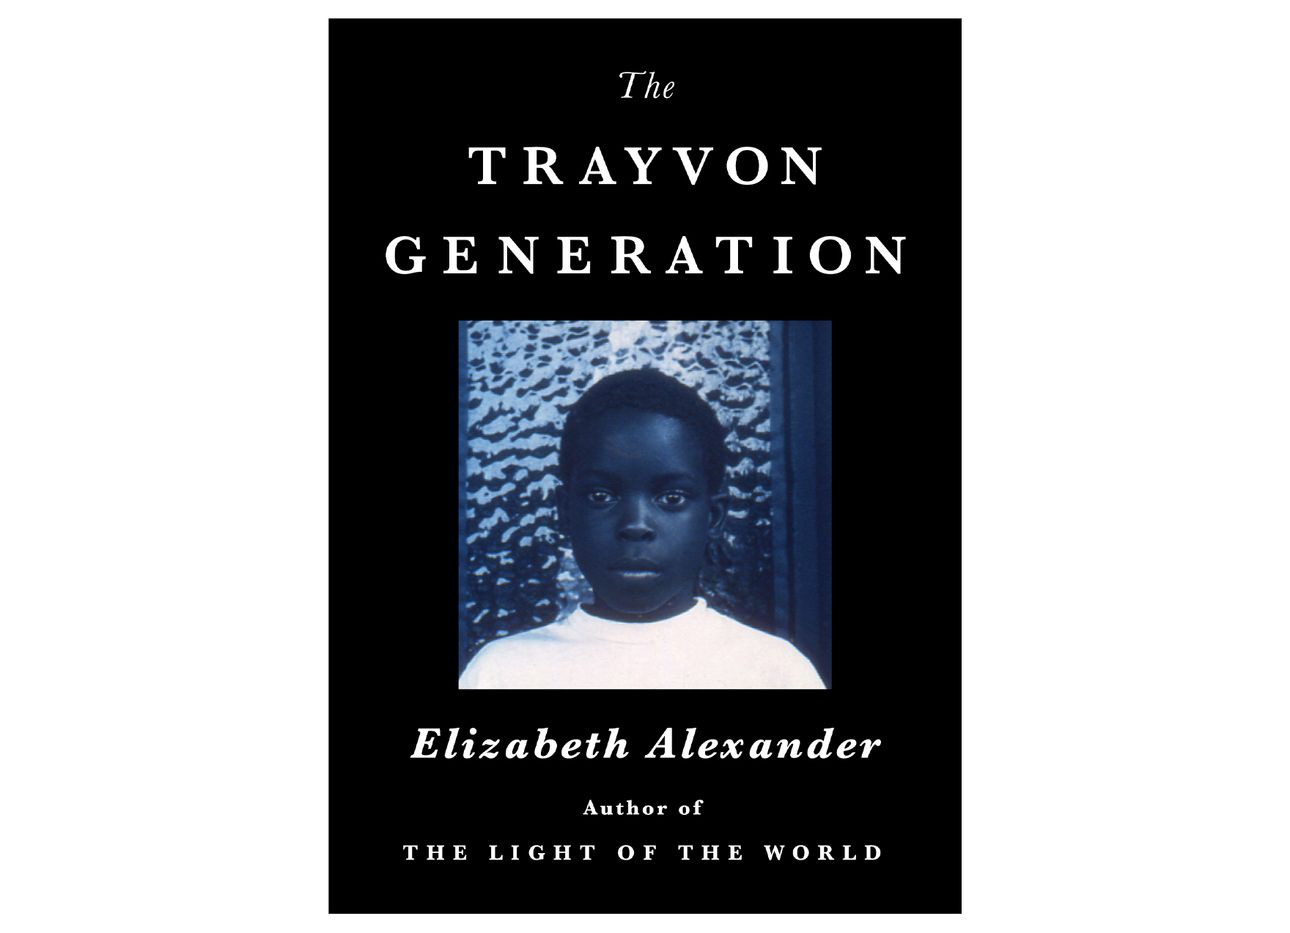 Cover of “The Trayvon Generation” by Elizabeth Alexander